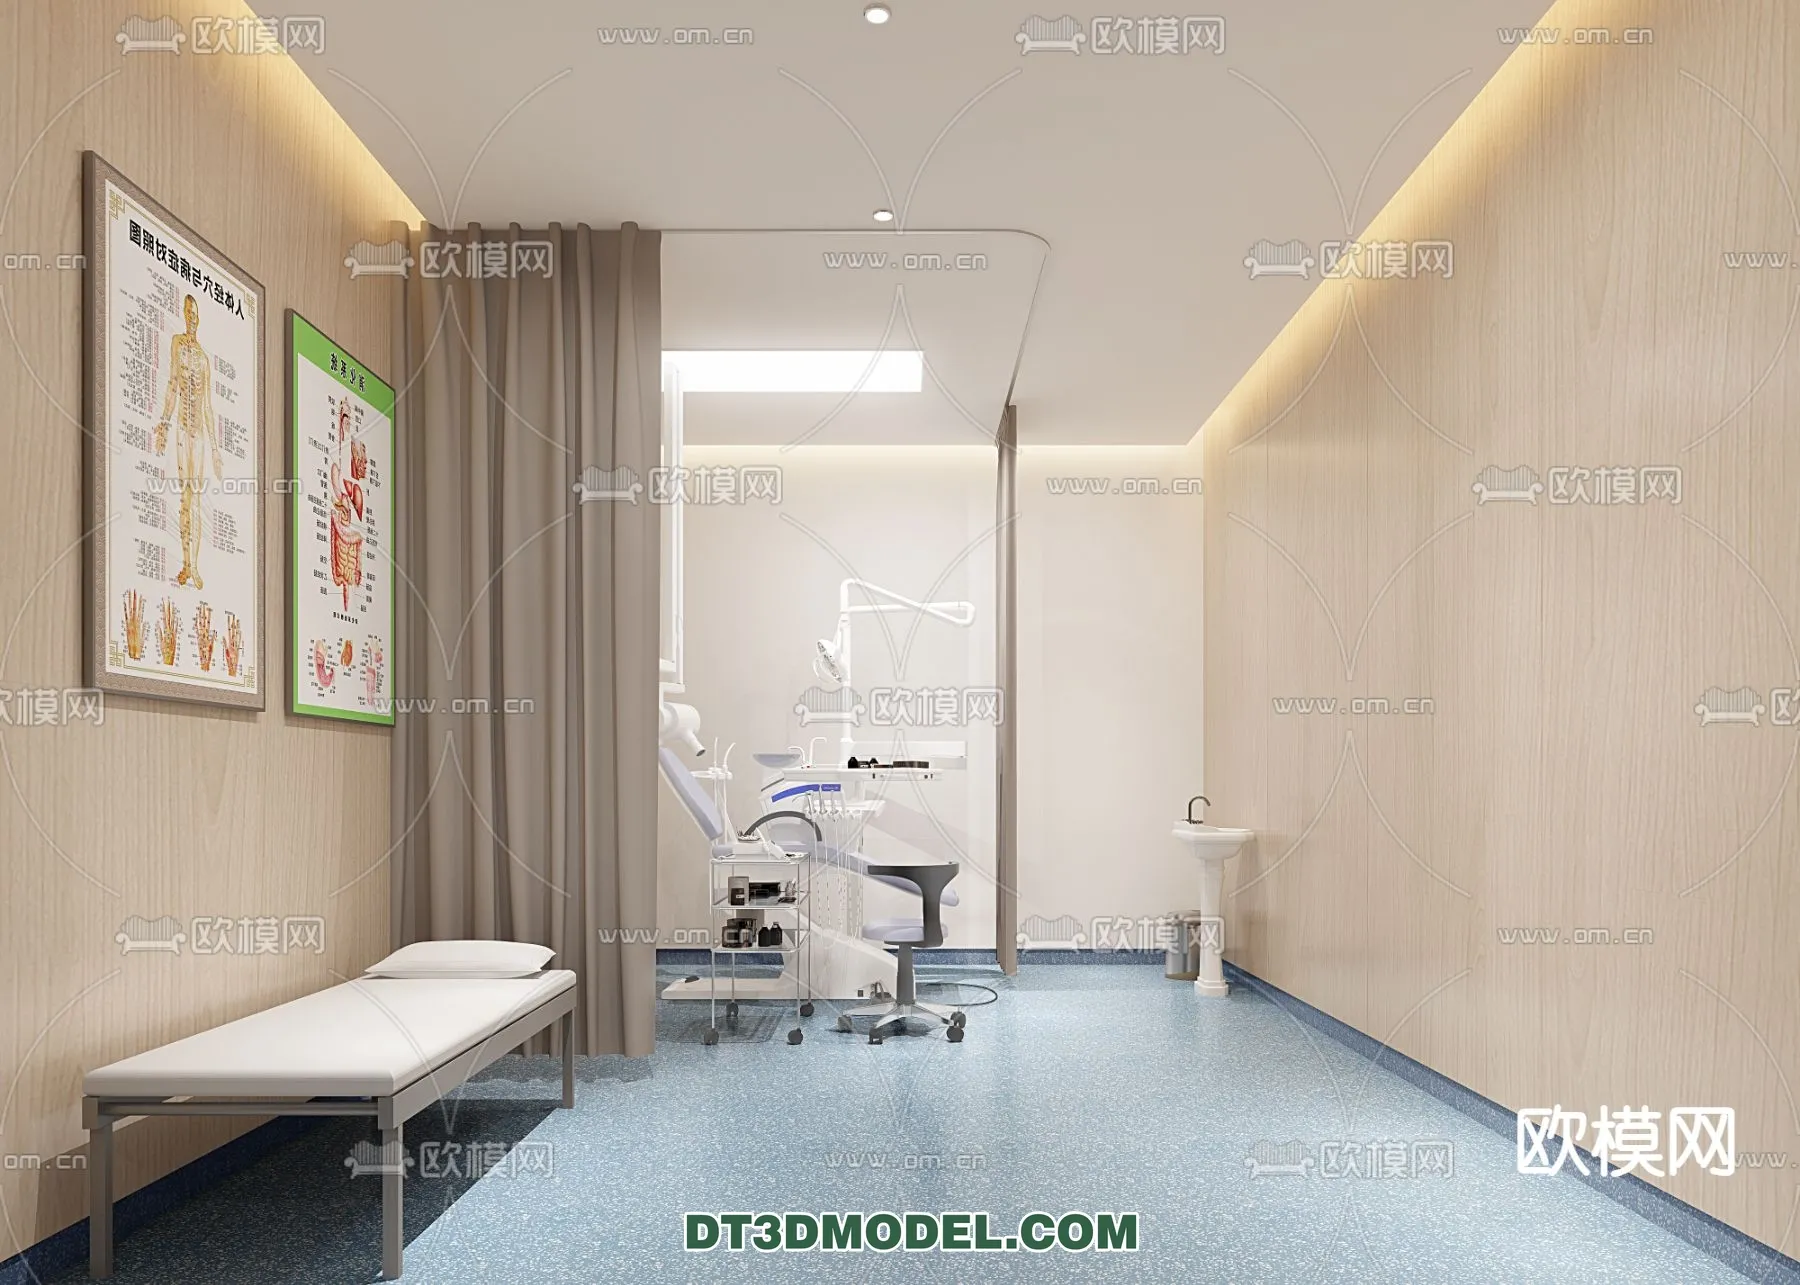 HOSPITAL 3D SCENES – MODERN – 0164